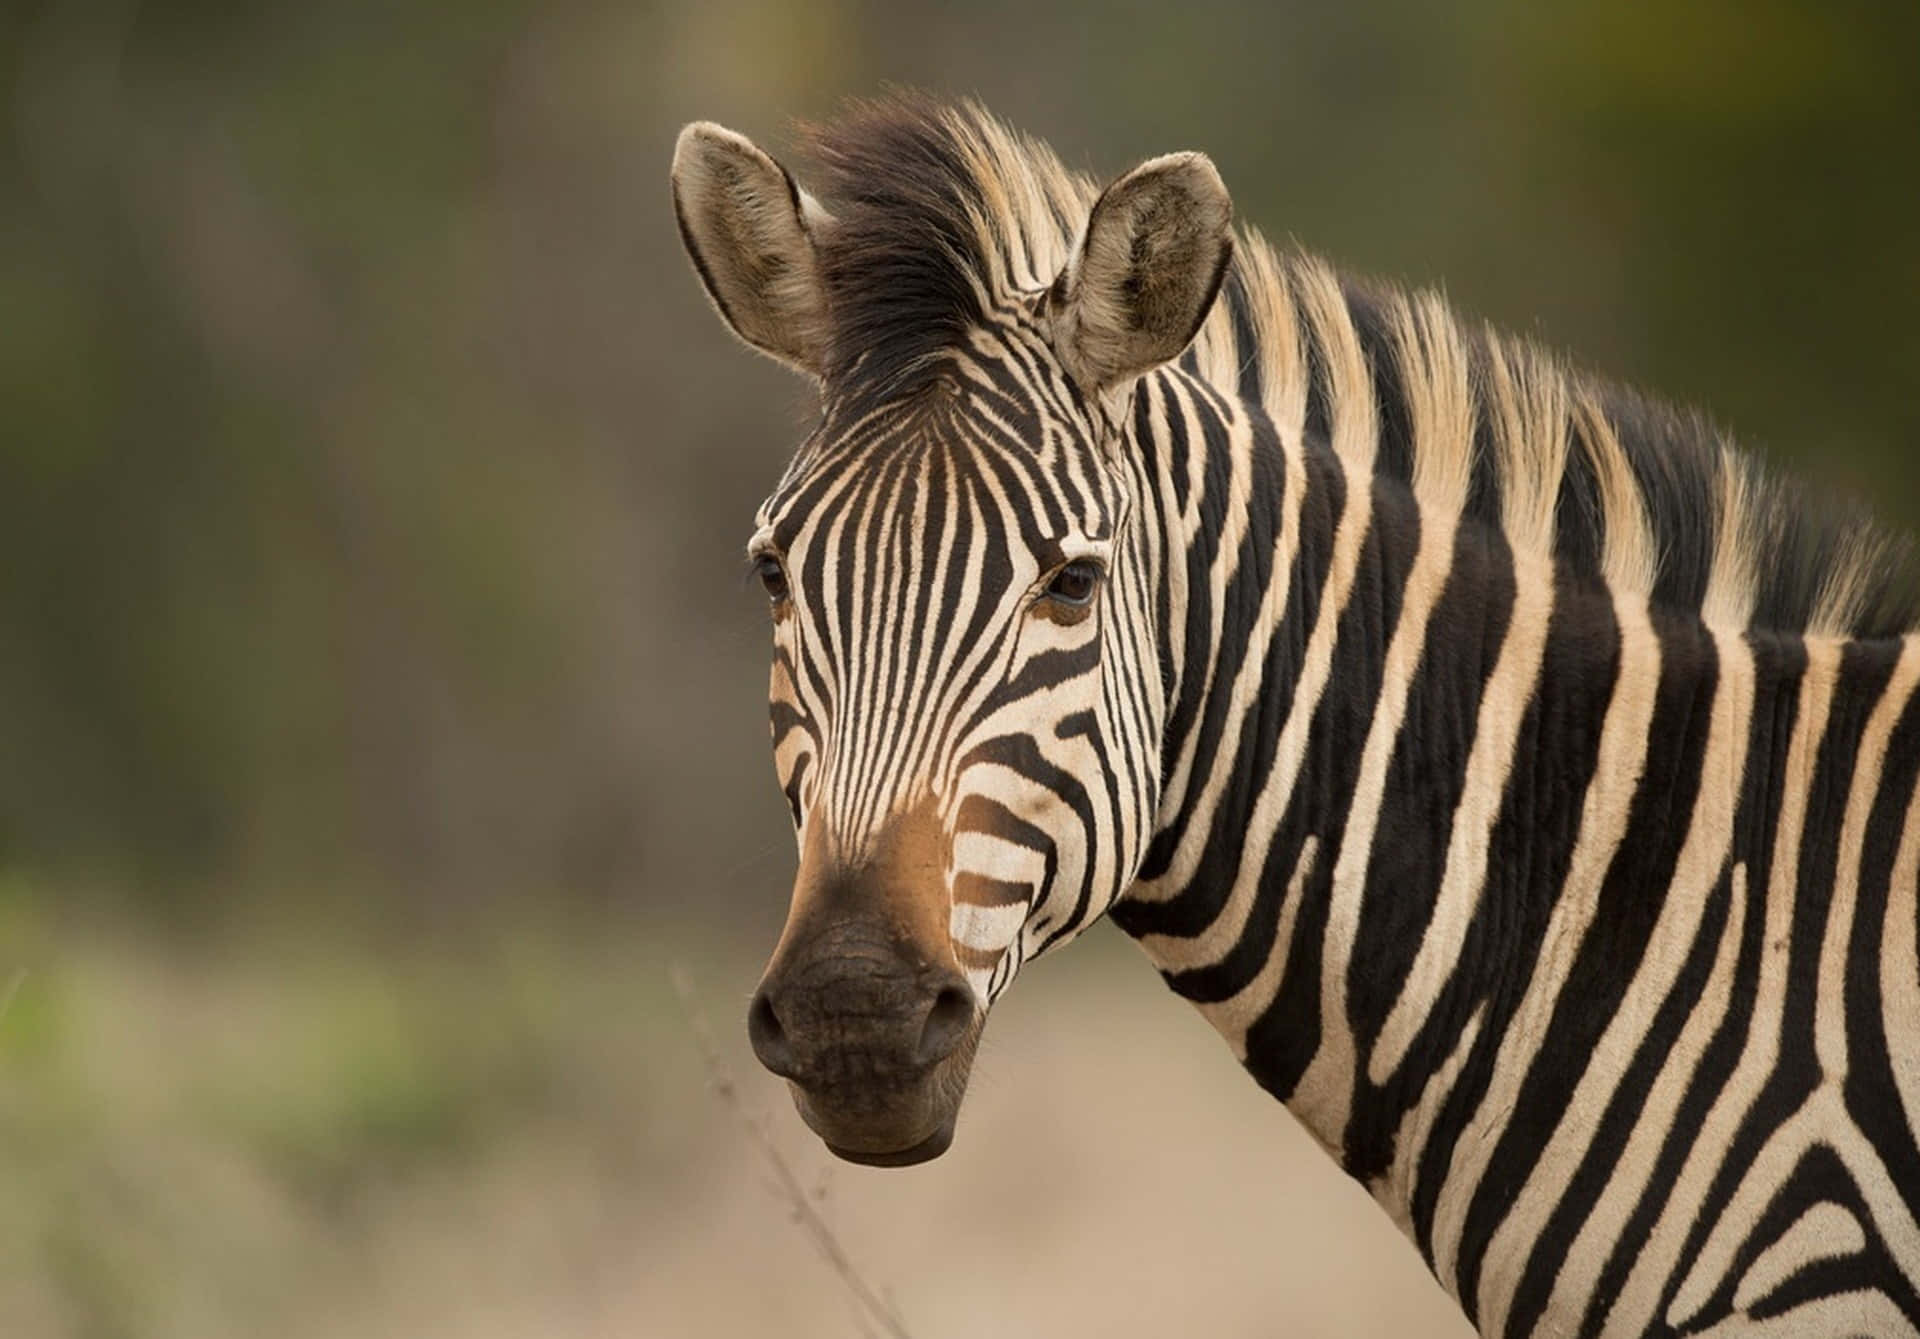 Unique Stripes On Every Zebra